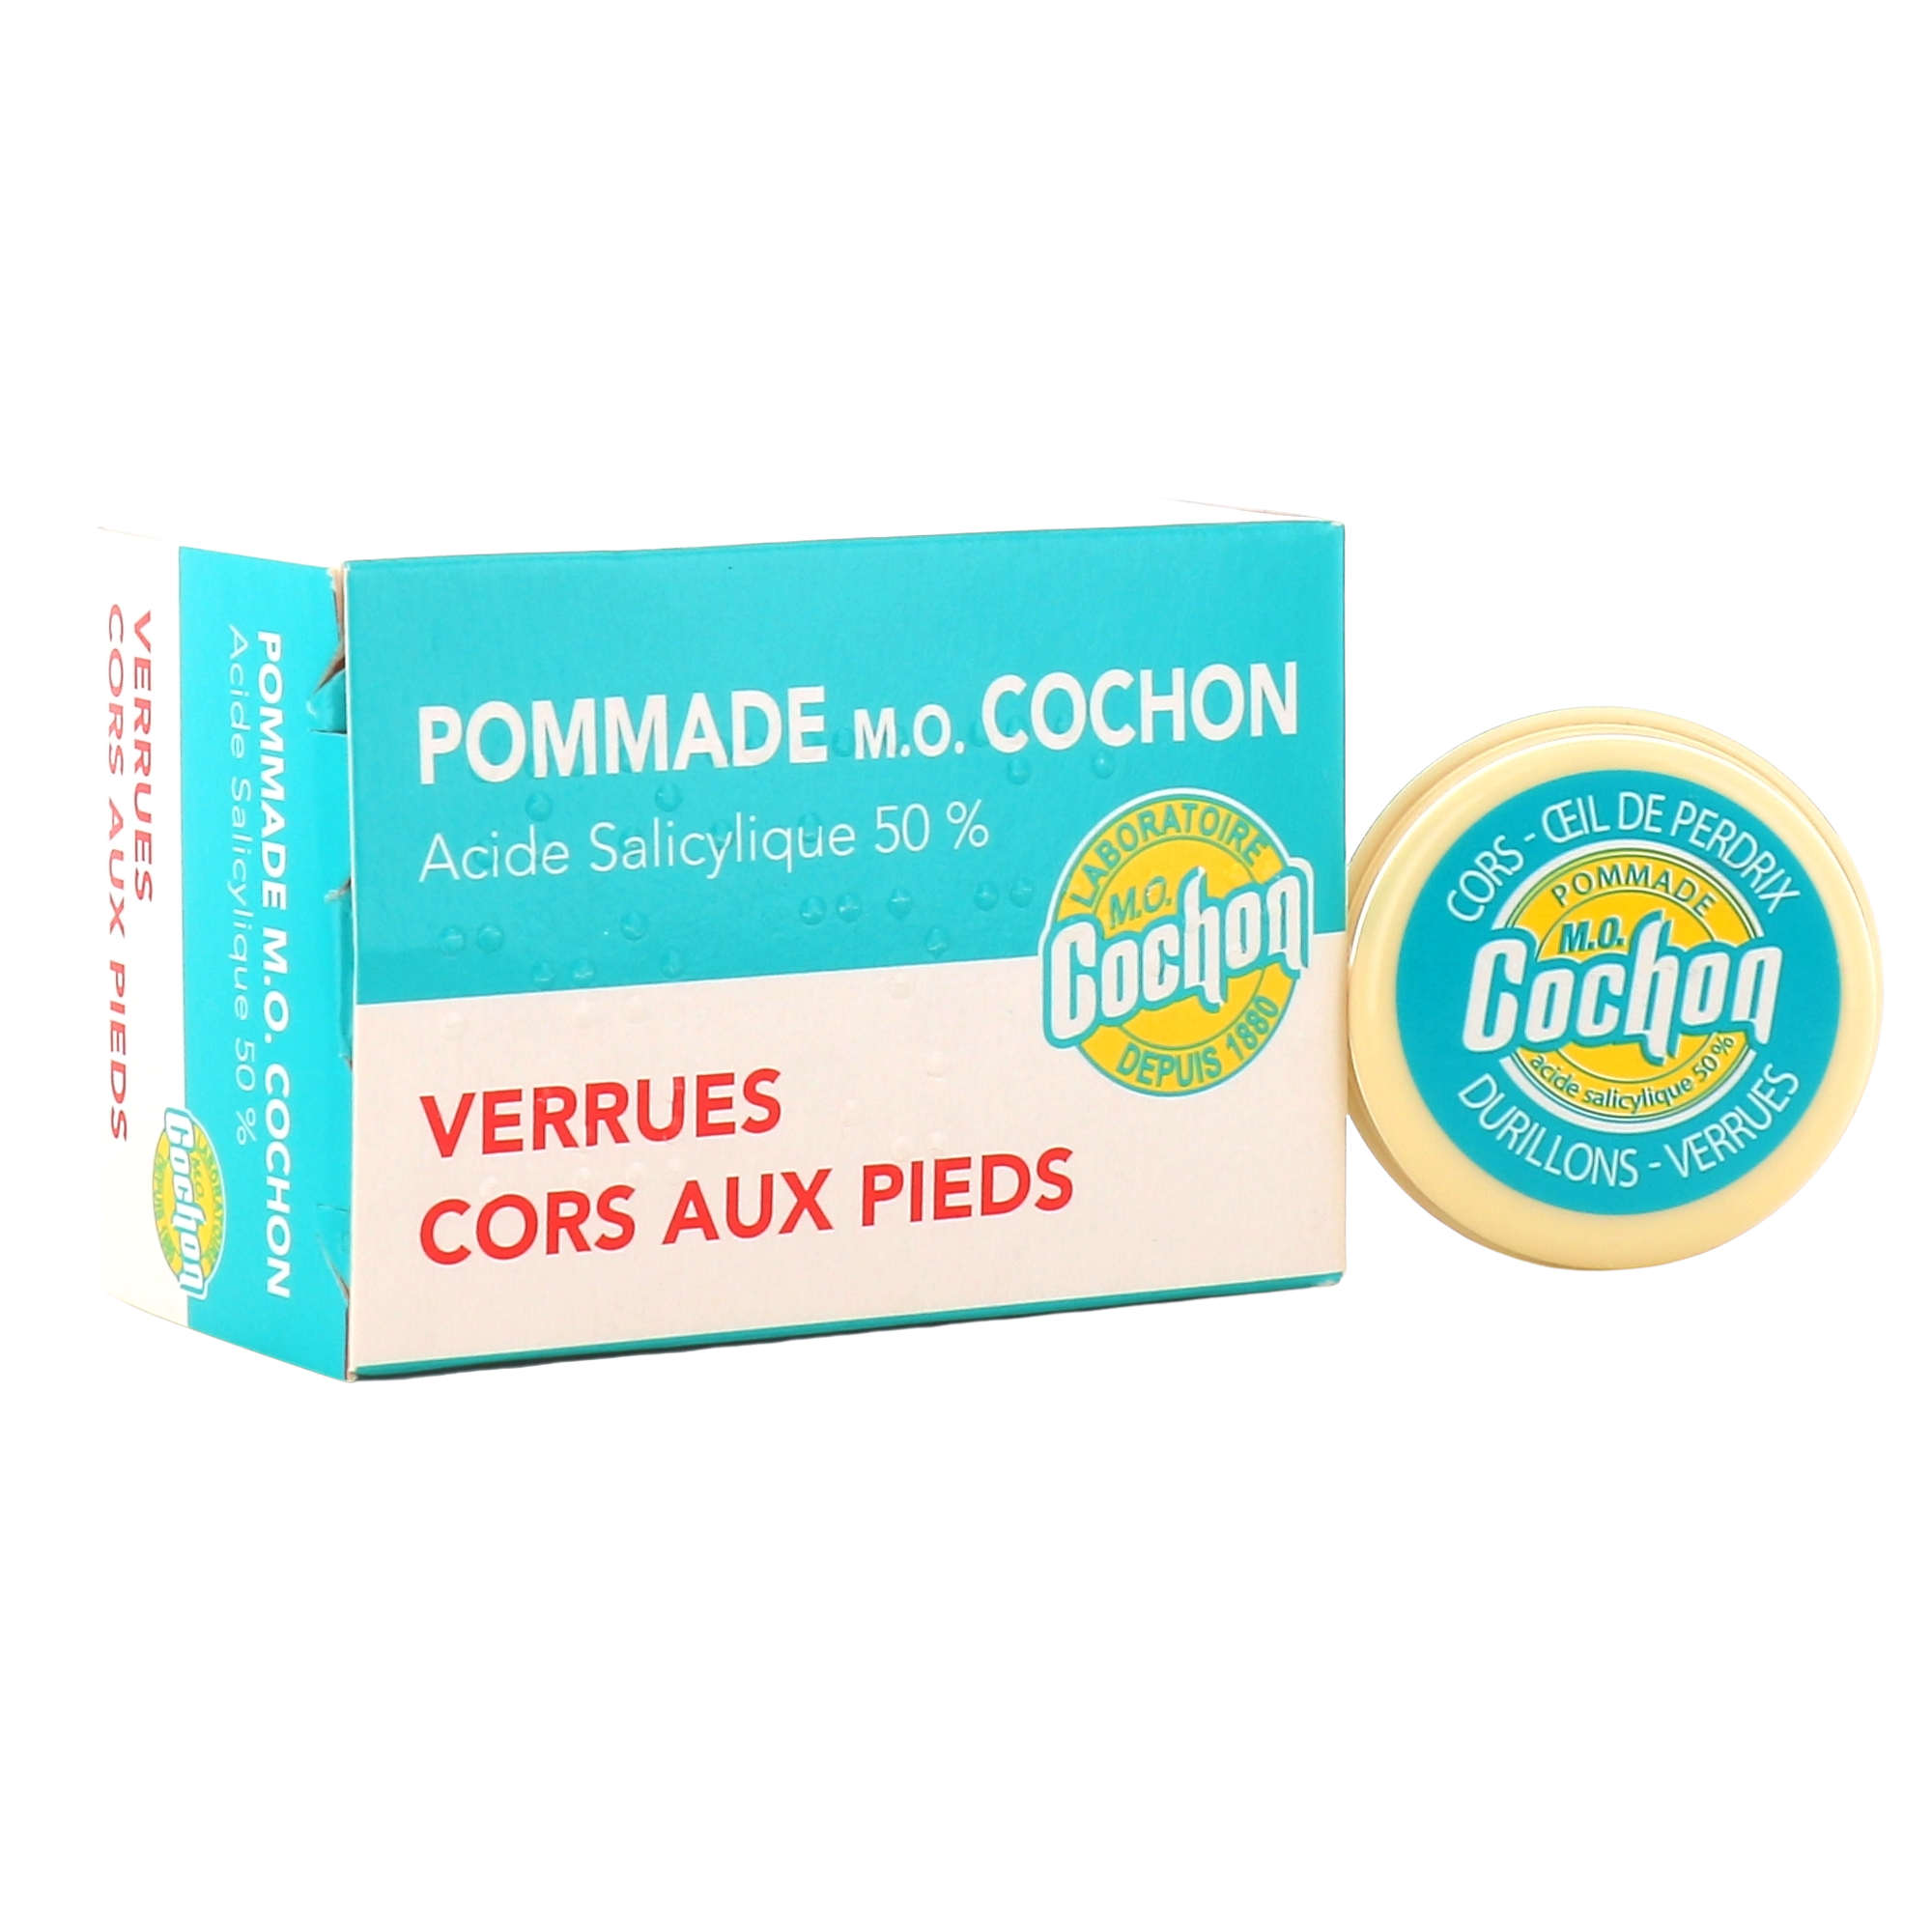 Pommade Cochon - Verrues & Cors - Acide Salicylique - 10g - MO cochon